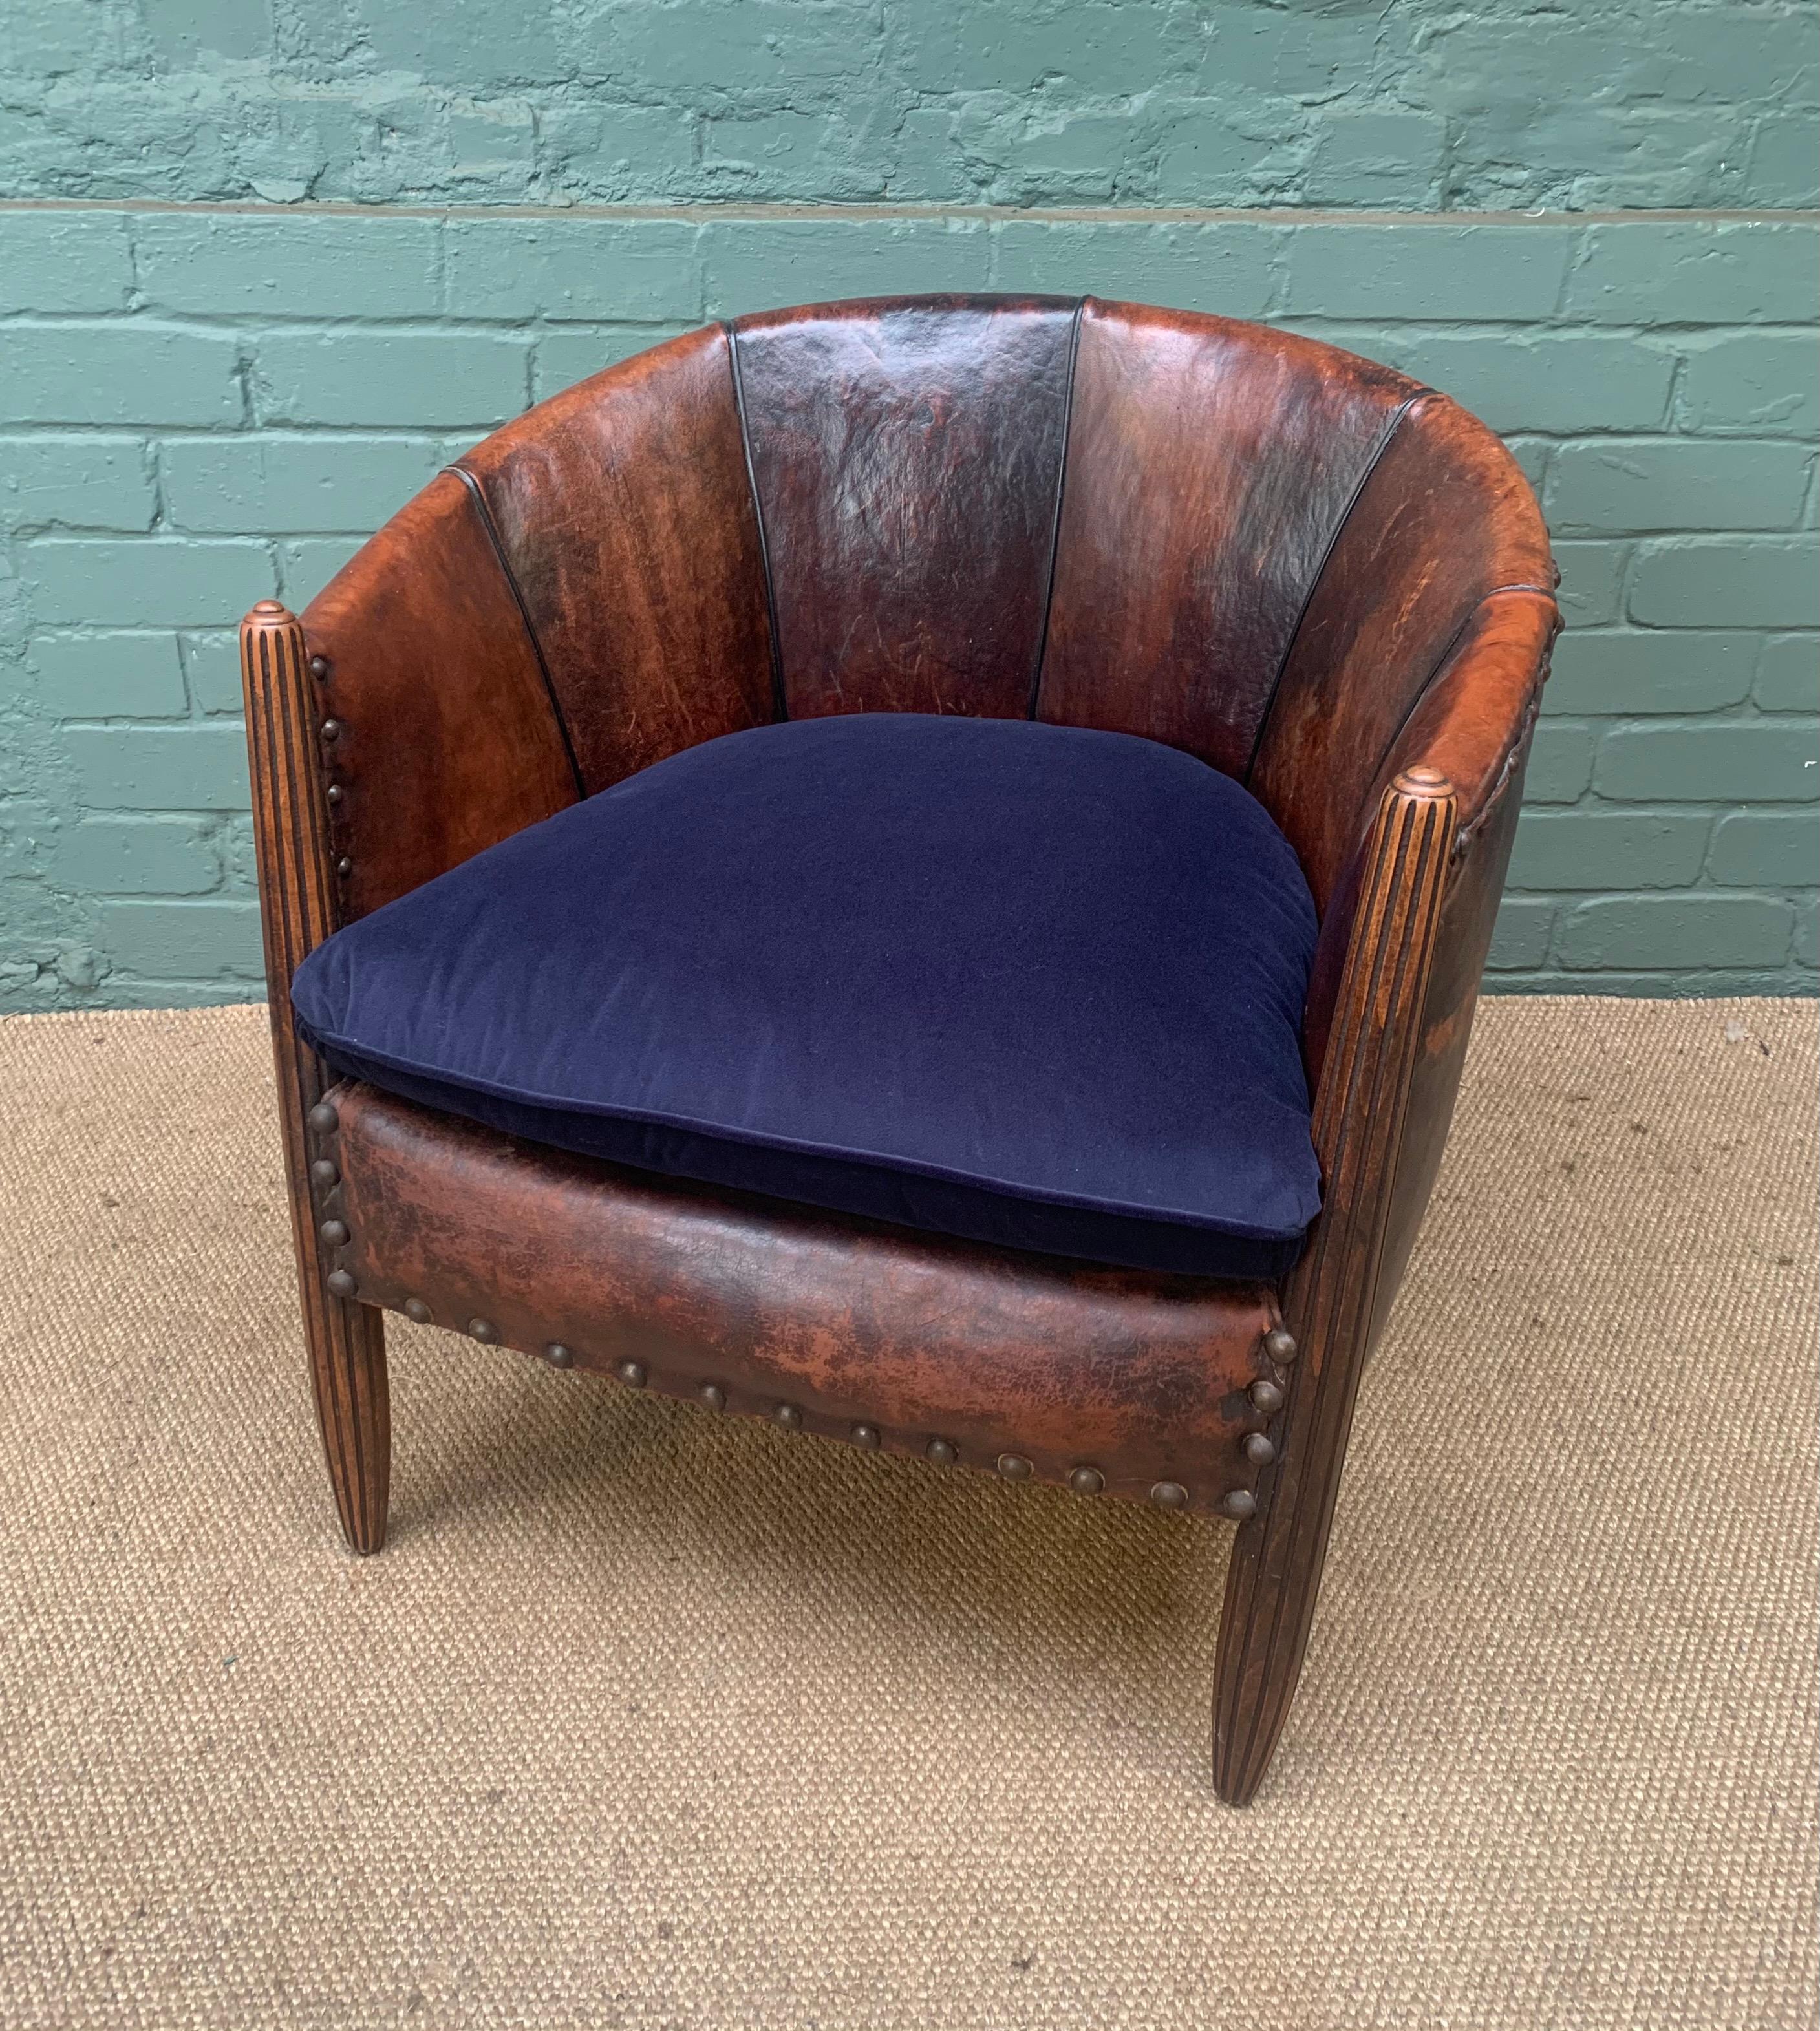 Leather A Beautiful French Club Chair att Paul Follot (1877-1941)